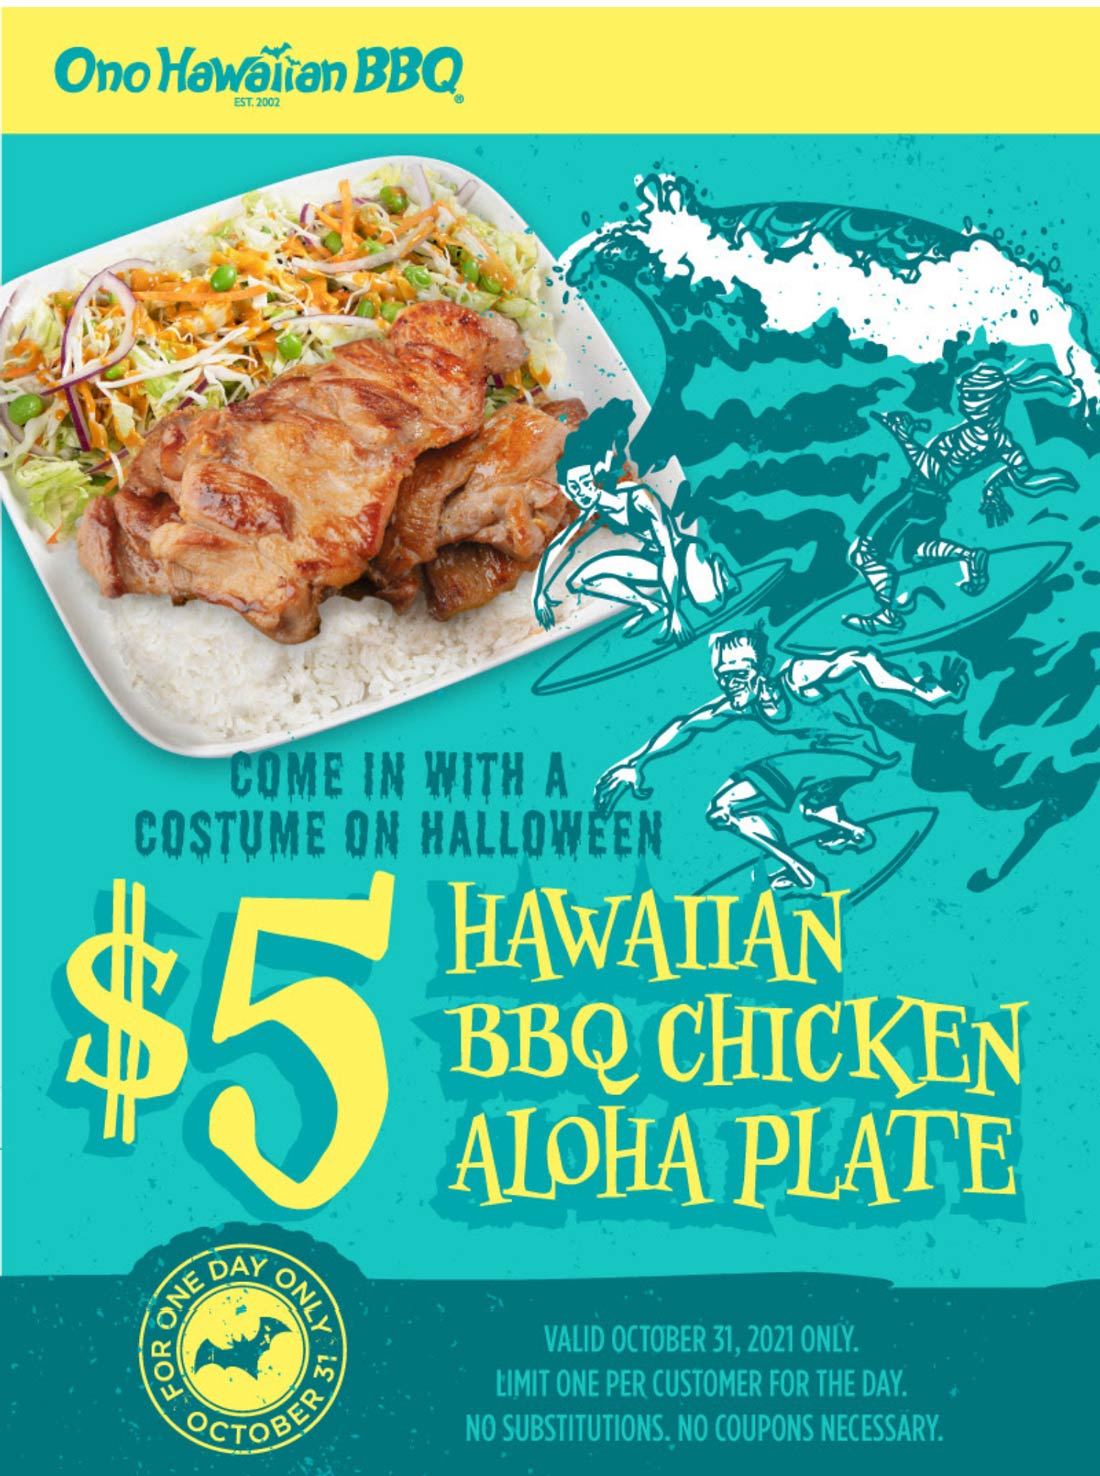 5 chicken aloha plate in costume Sunday at Ono Hawaiian BBQ 